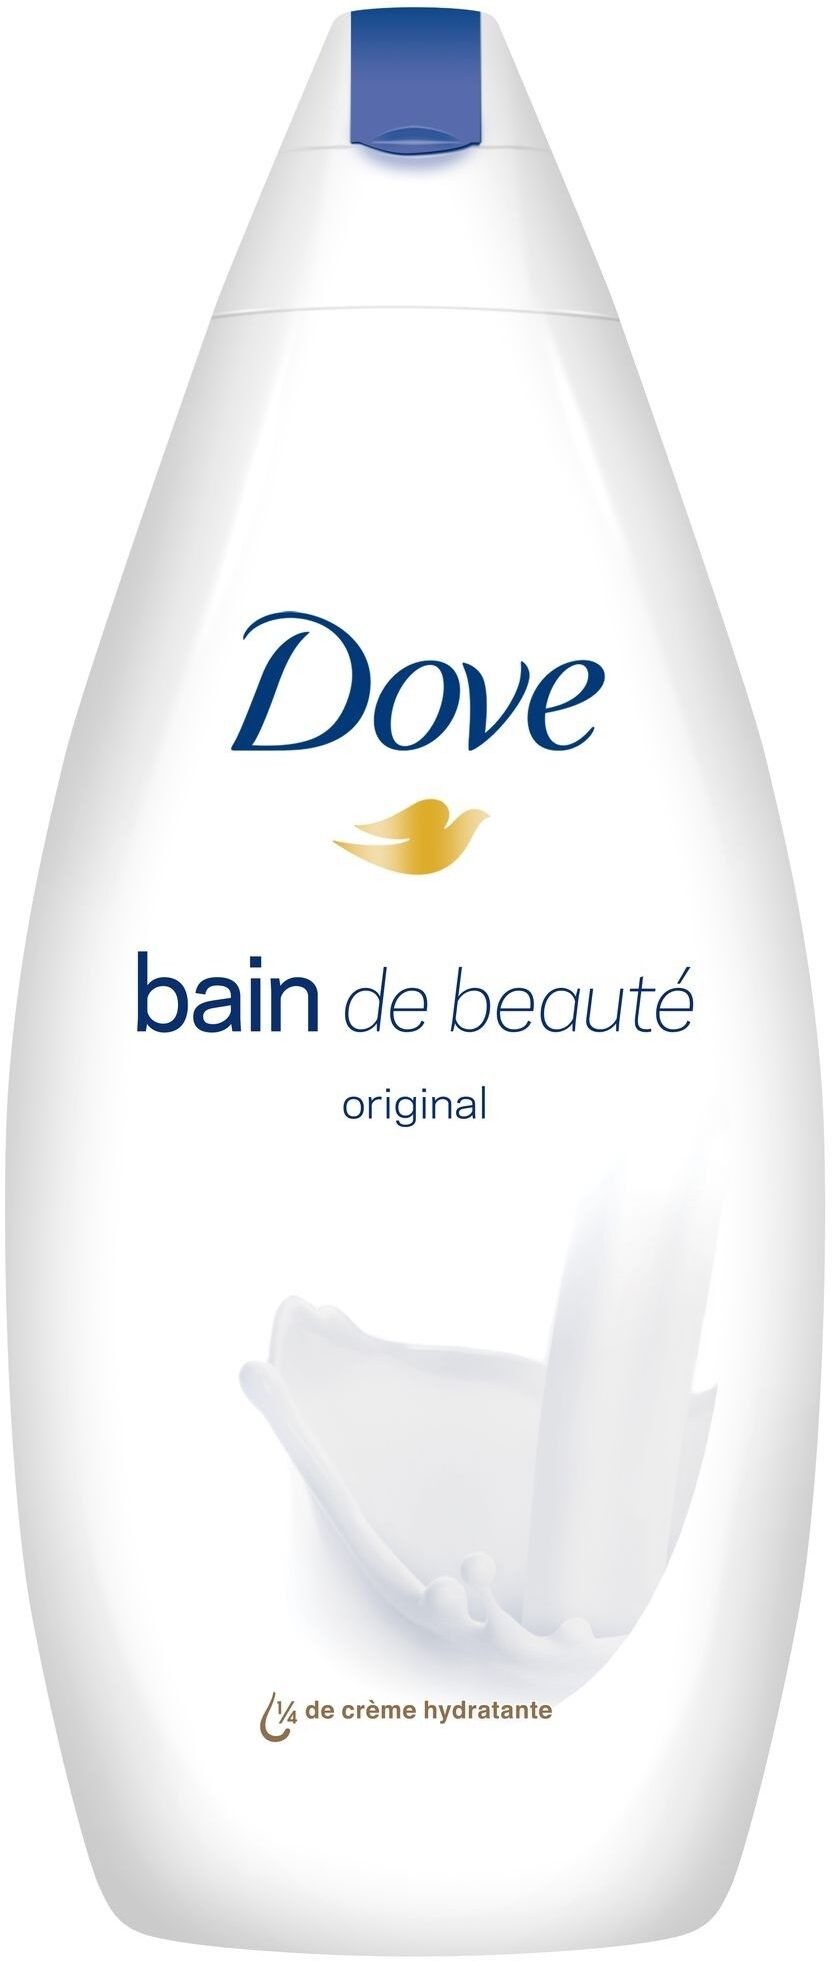 Dove Original Bain Beauté Hydratant 500ml - Produto - fr